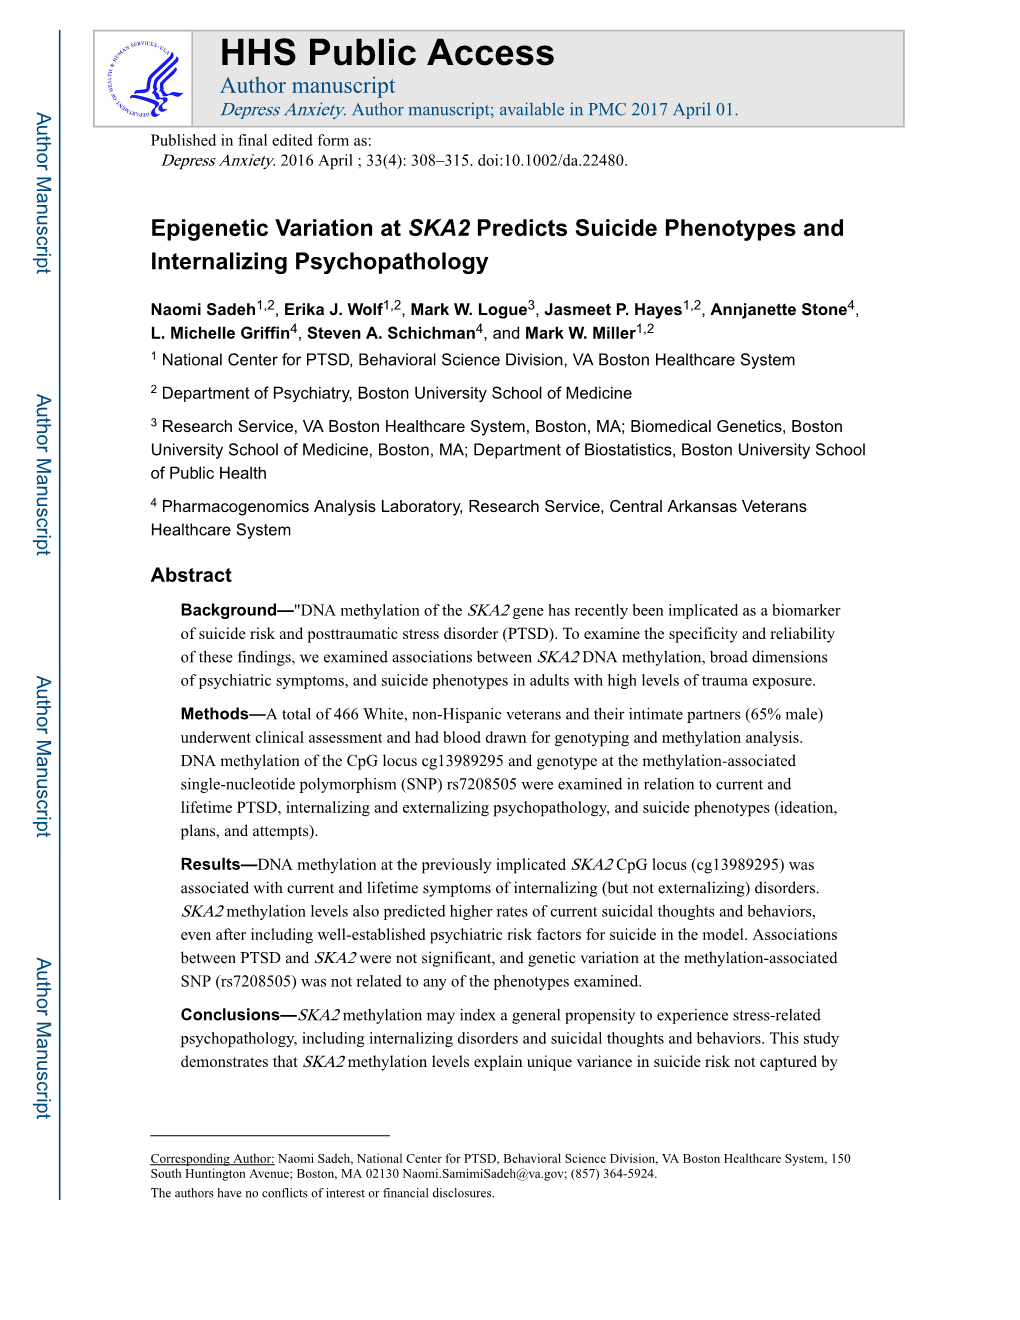 Epigenetic Variation at SKA2 Predicts Suicide Phenotypes and Internalizing Psychopathology